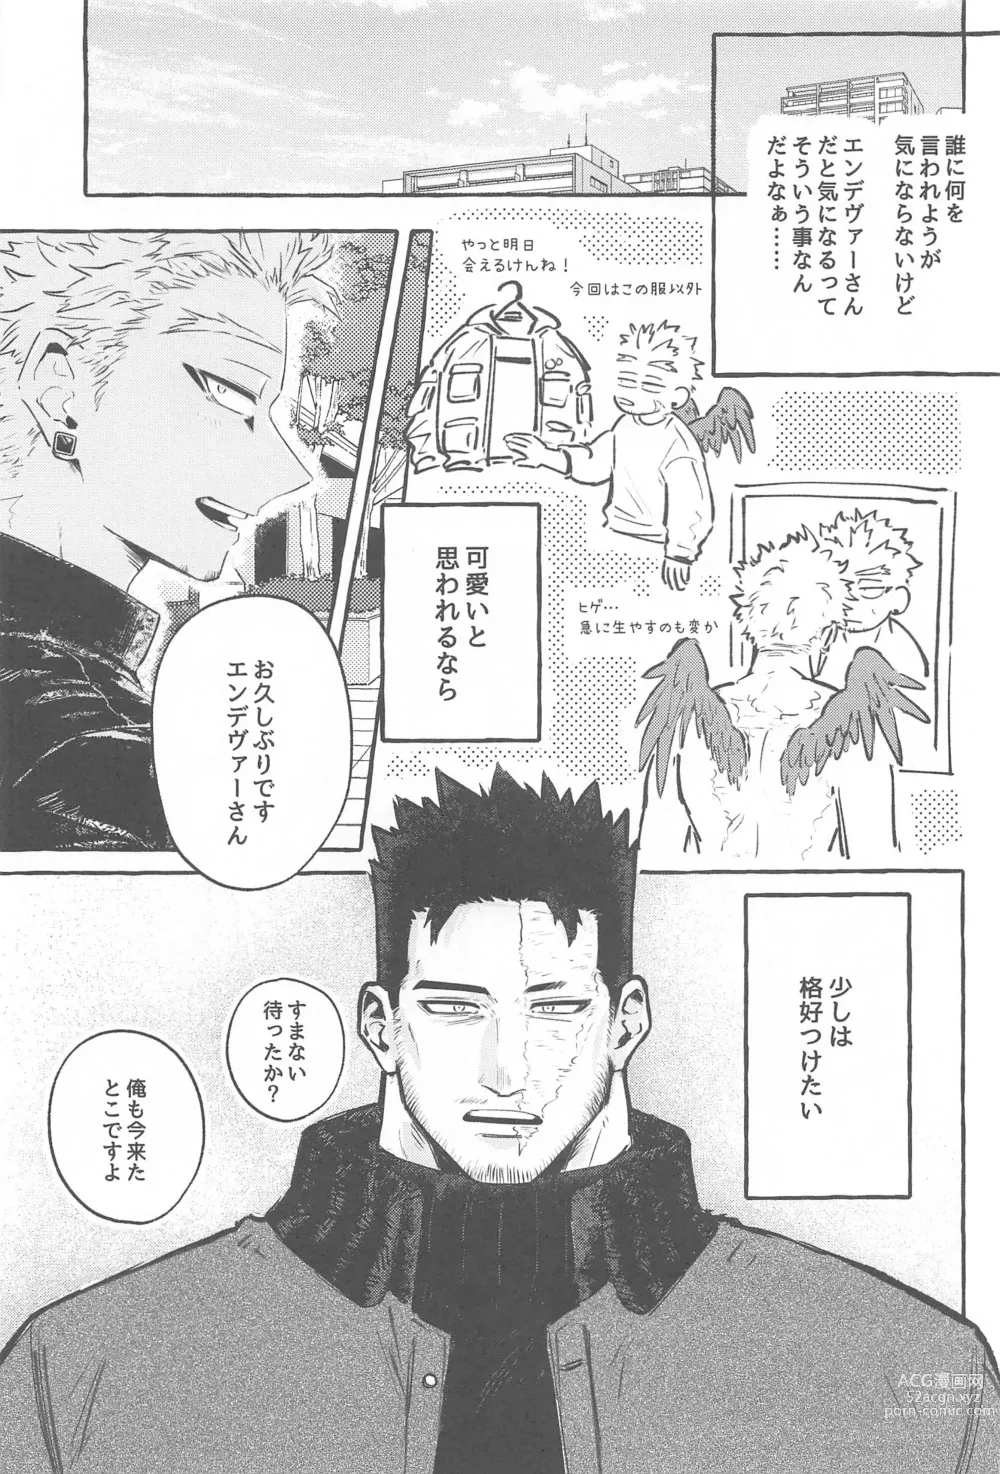 Page 6 of doujinshi Warrgle Sengen